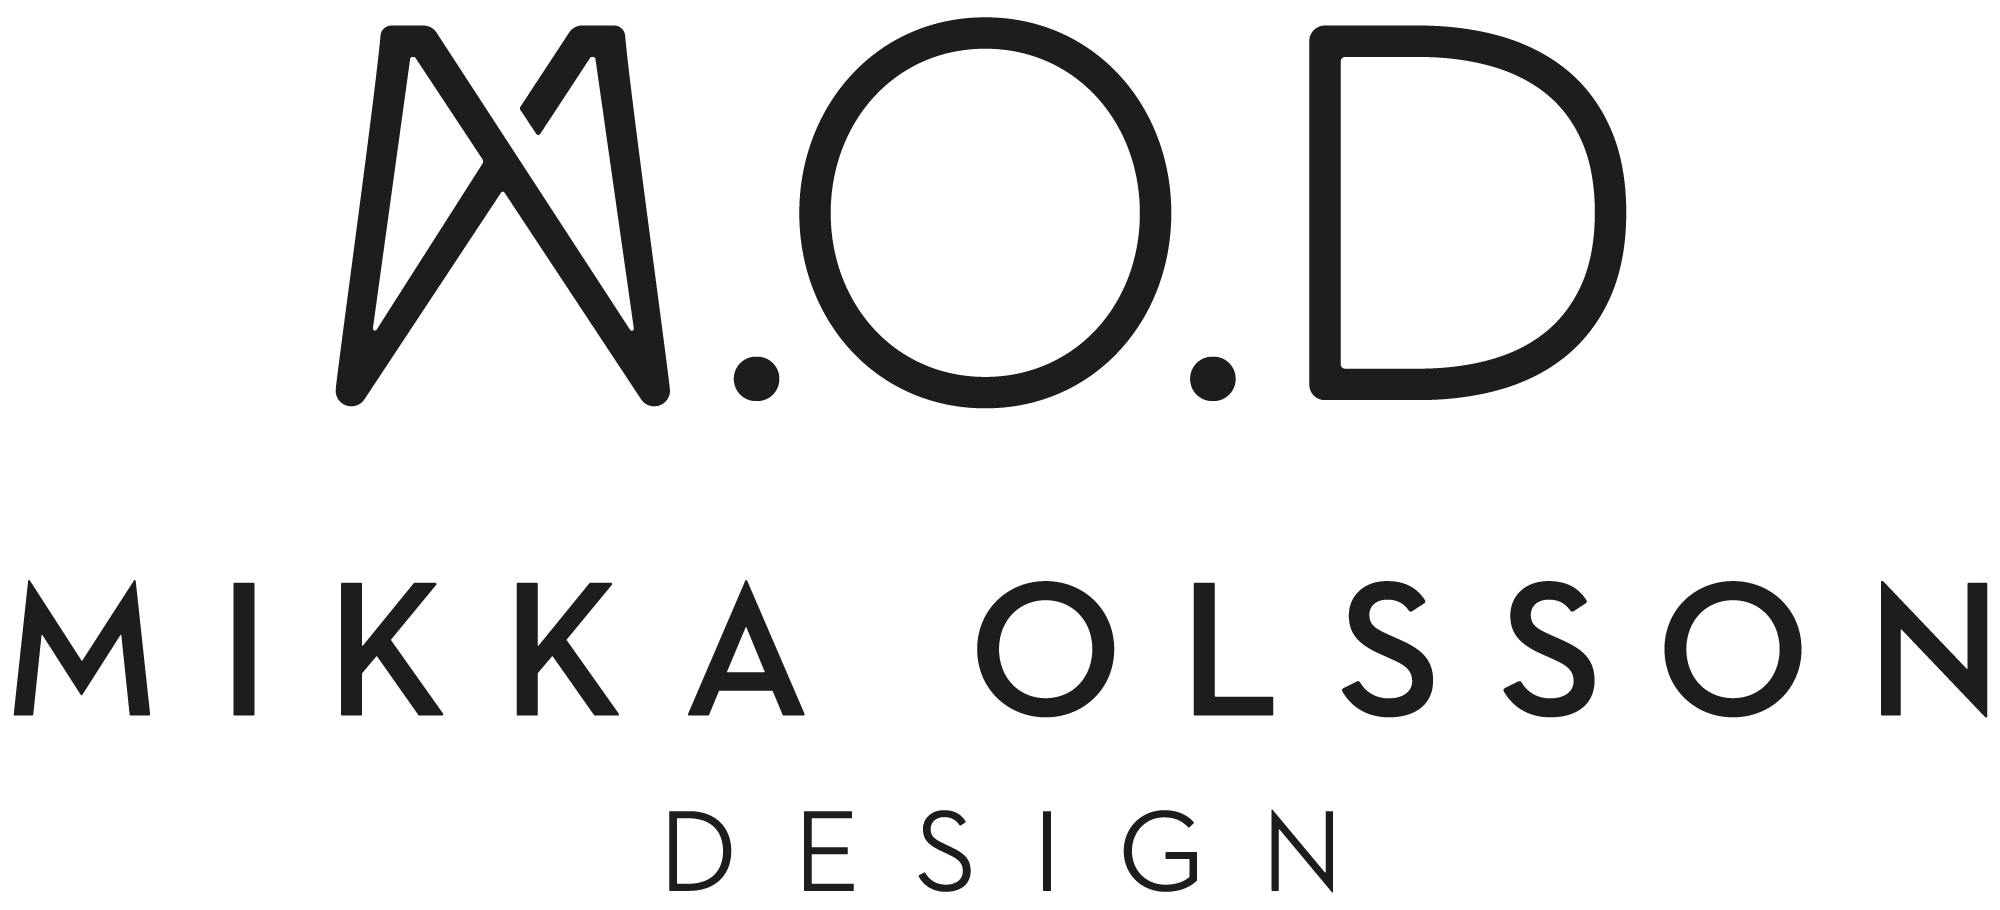 Mikka Olsson Design